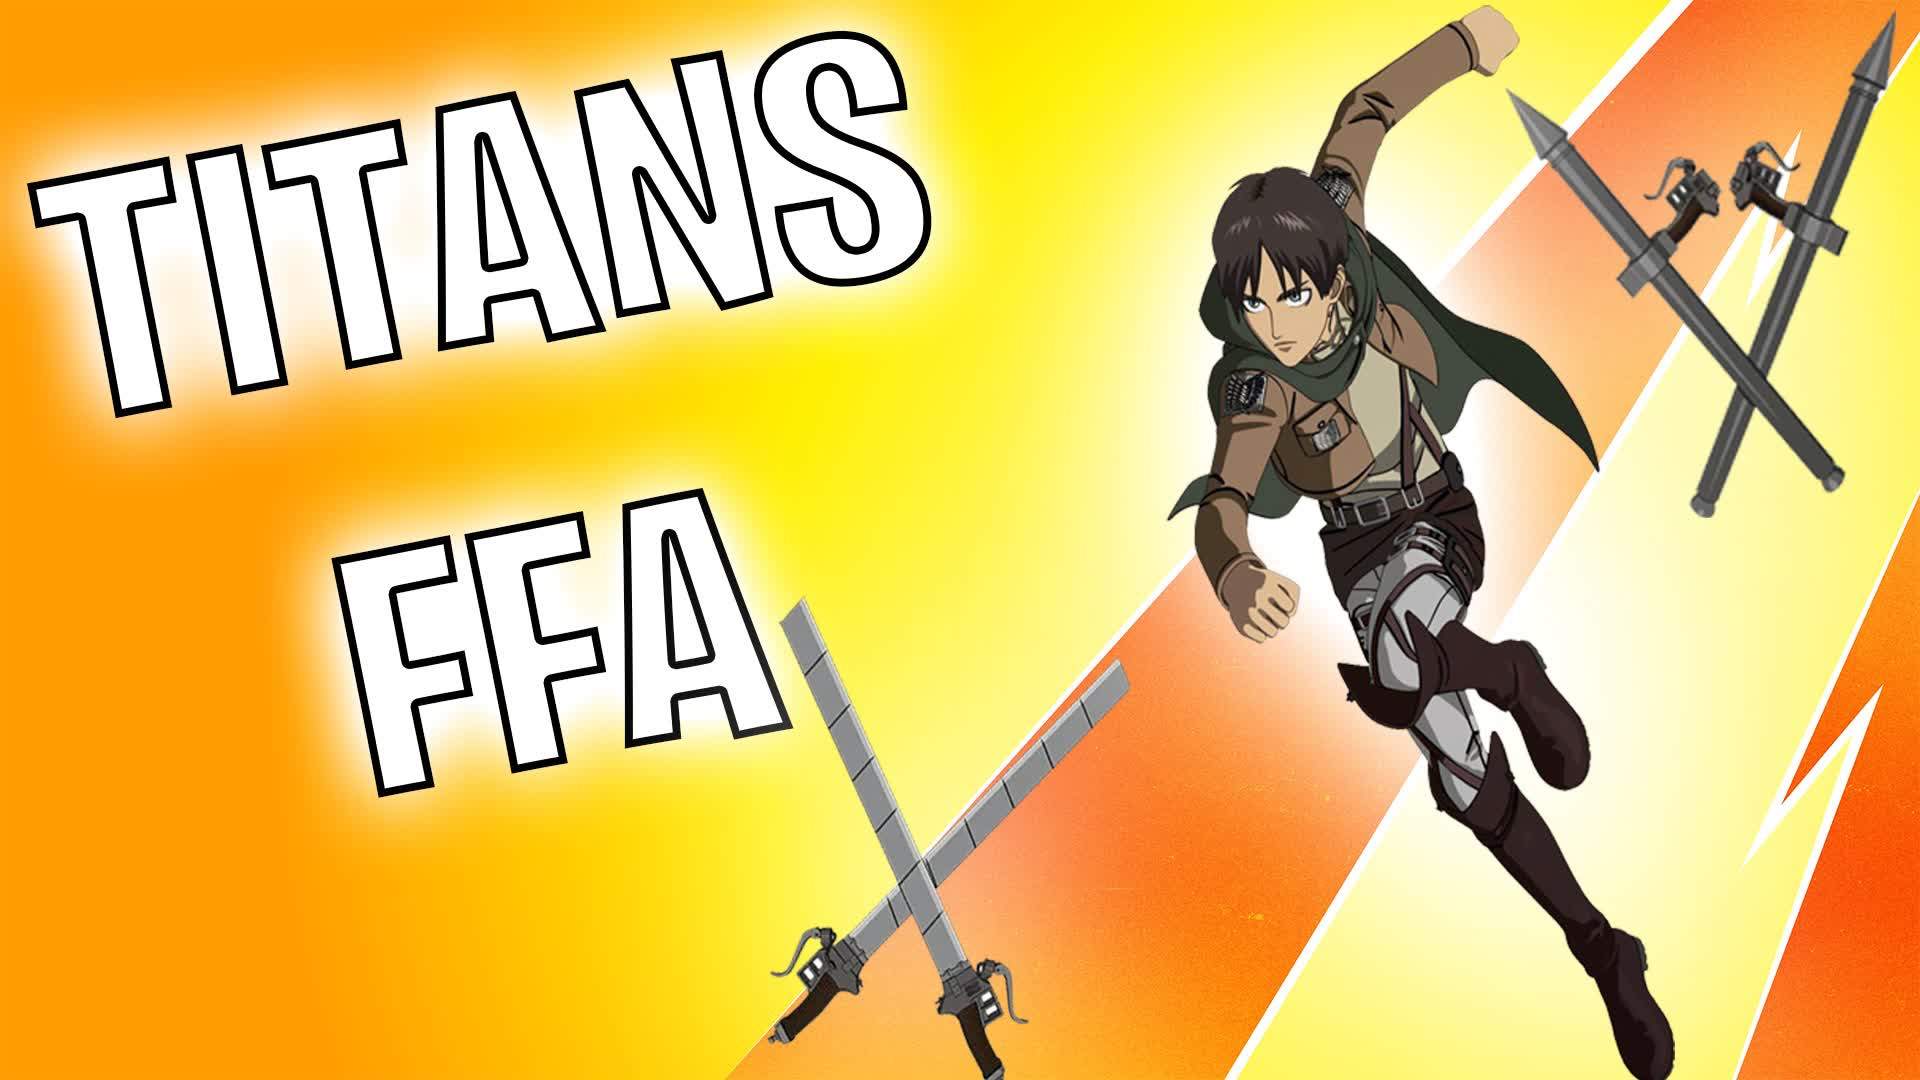 Titan's FFA with Mythics